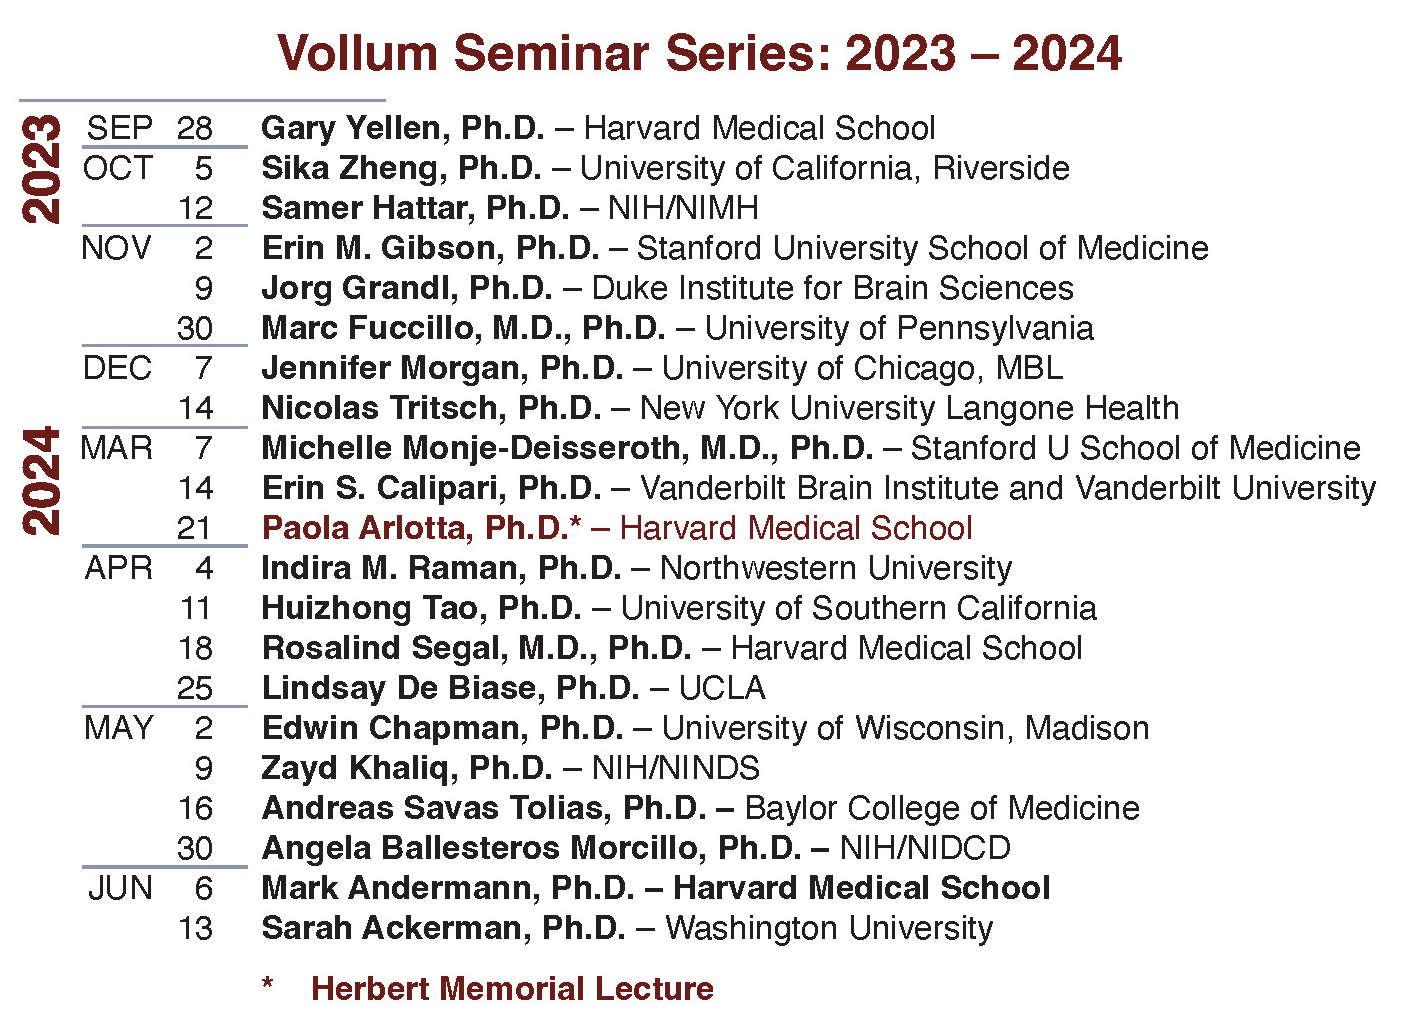 2023–2024 Vollum Seminar Series schedule